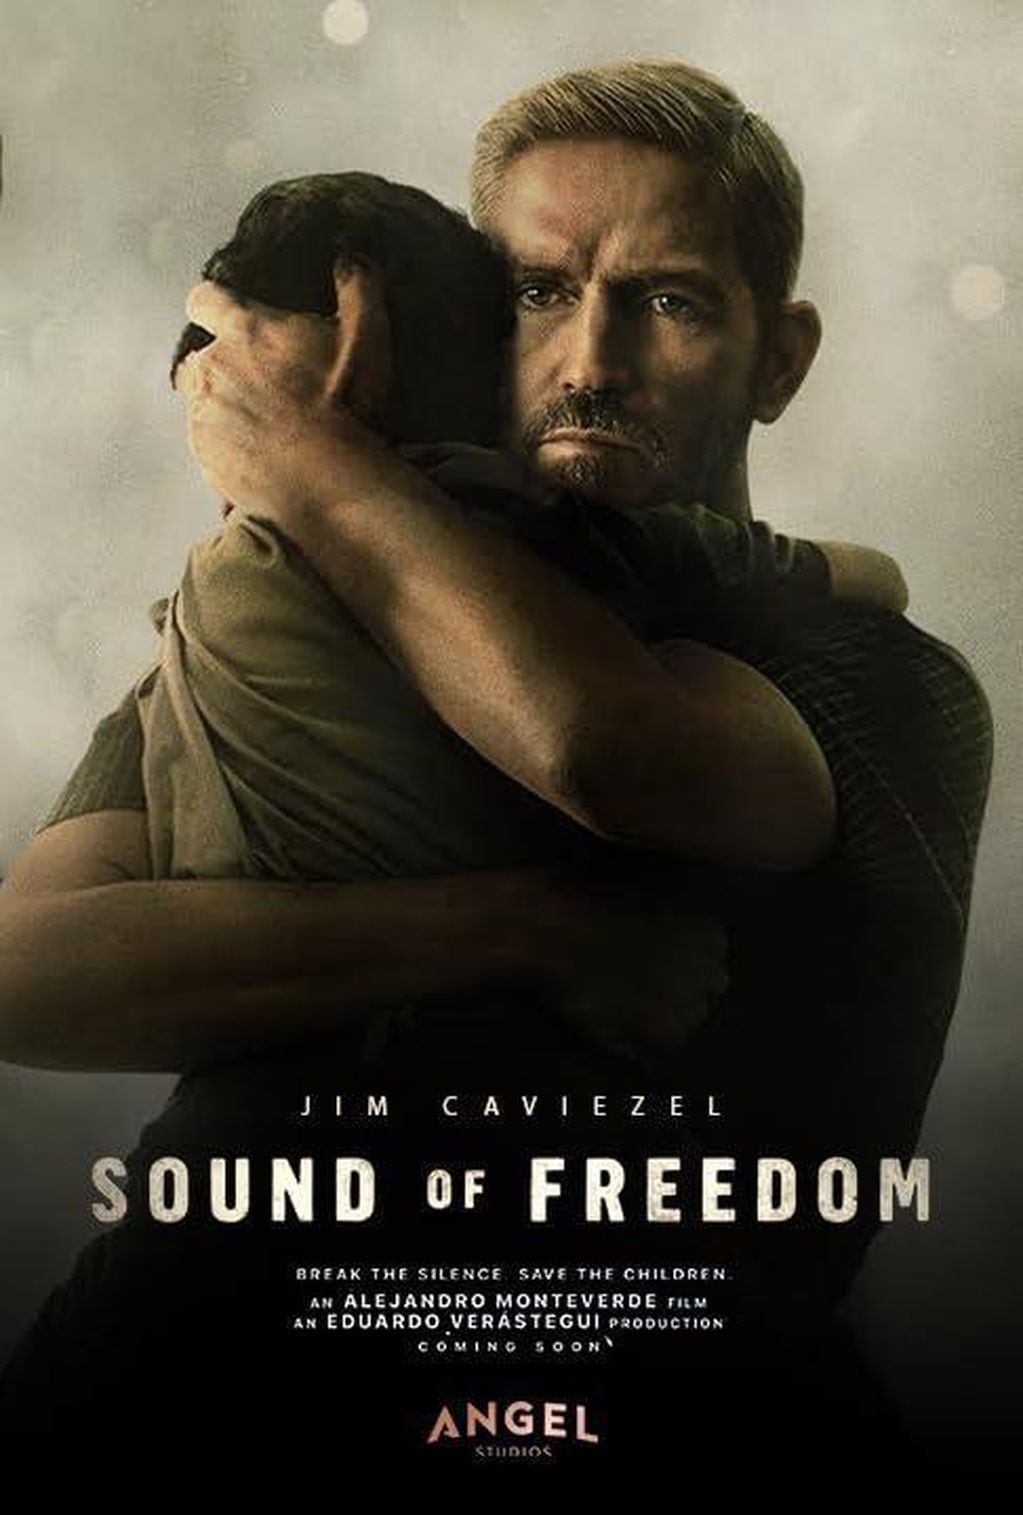 Sound of freedom llega a la Argentina, la película más polémica del